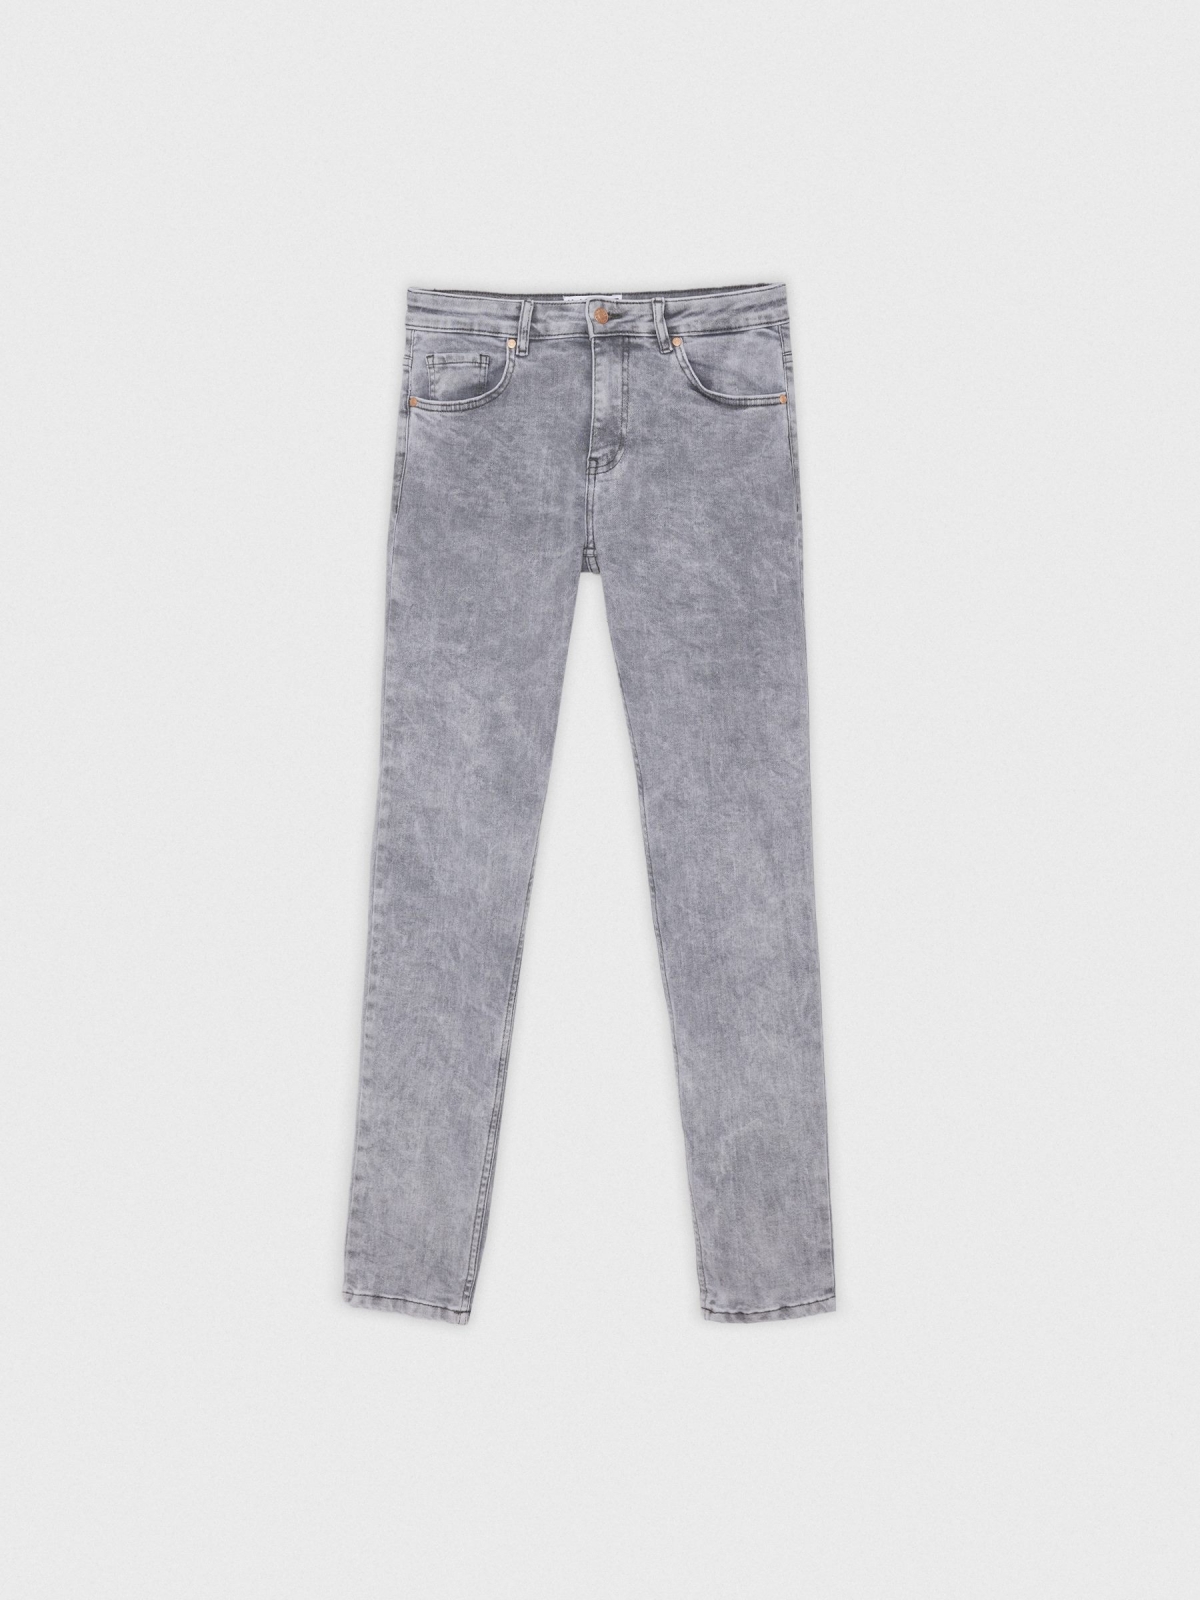  Basic gray skinny jeans grey